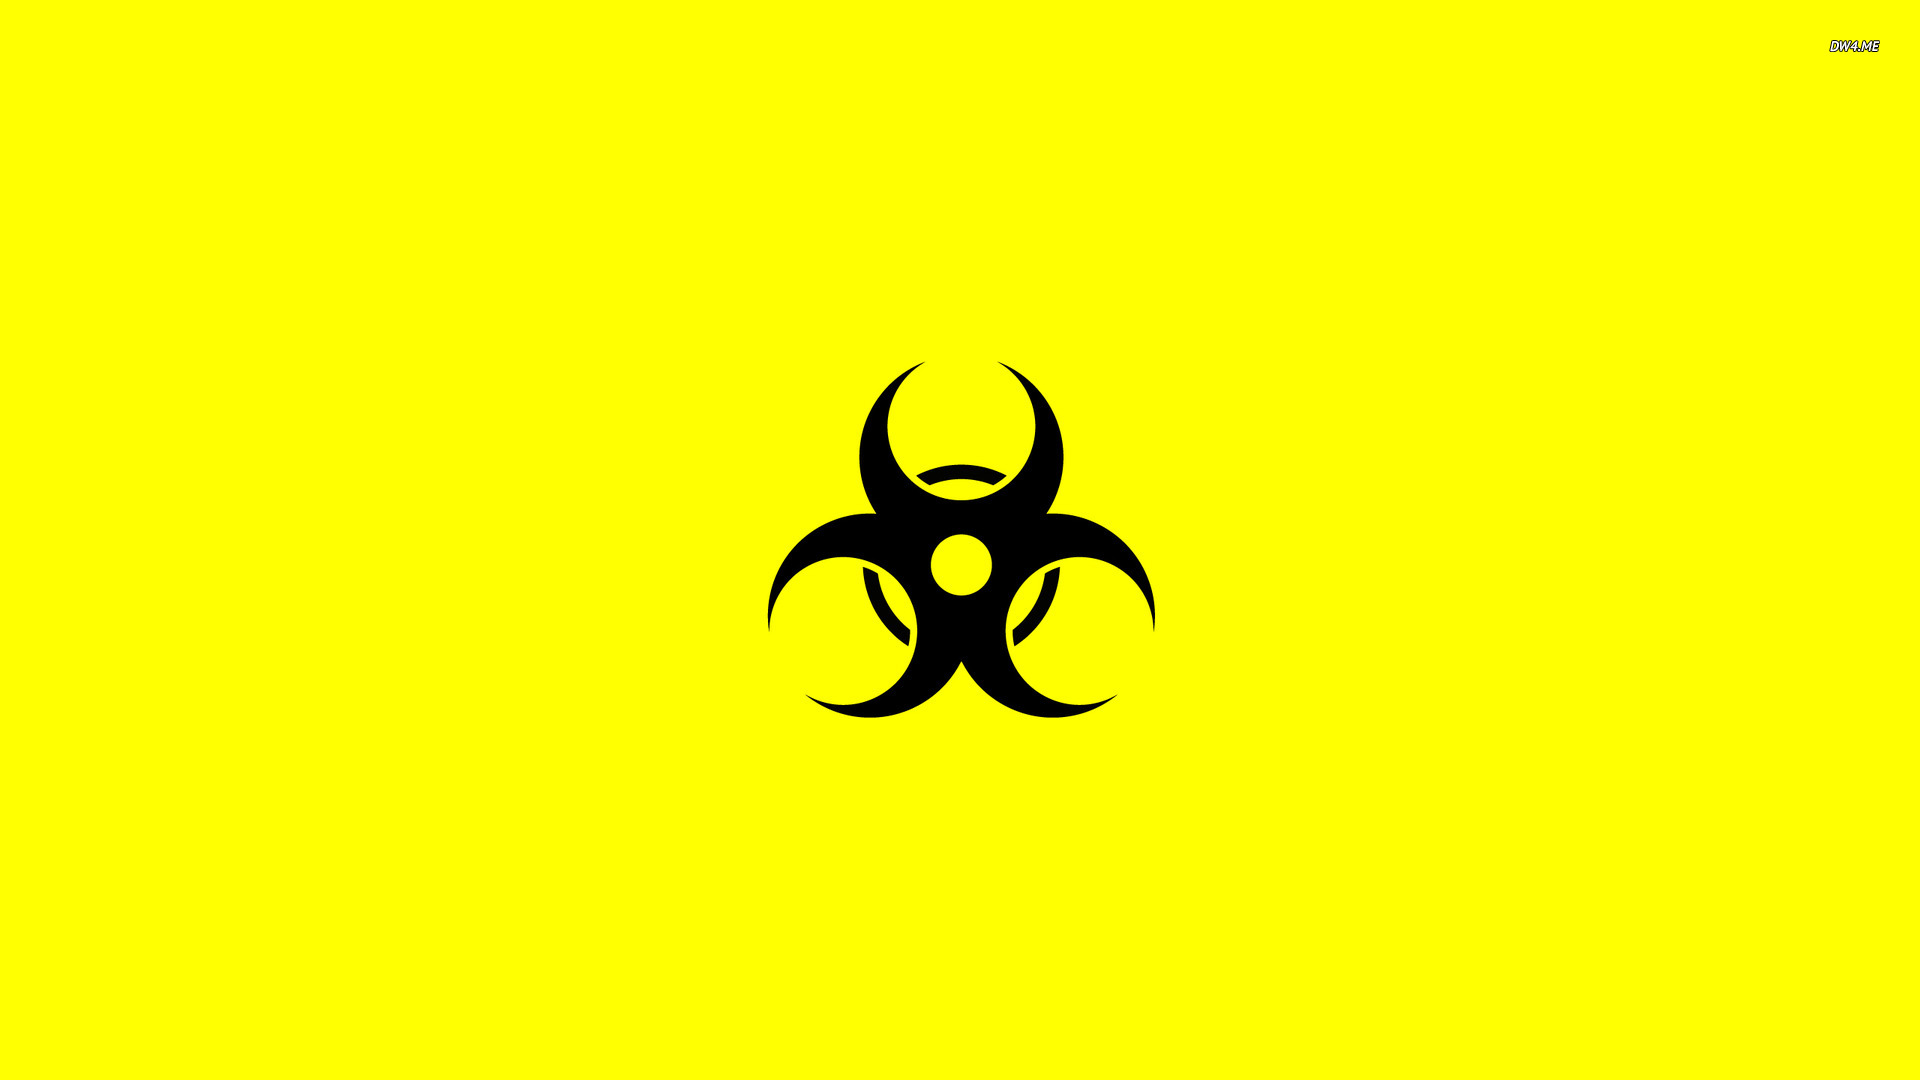 Wallpapers For > Biohazard Symbol Wallpaper